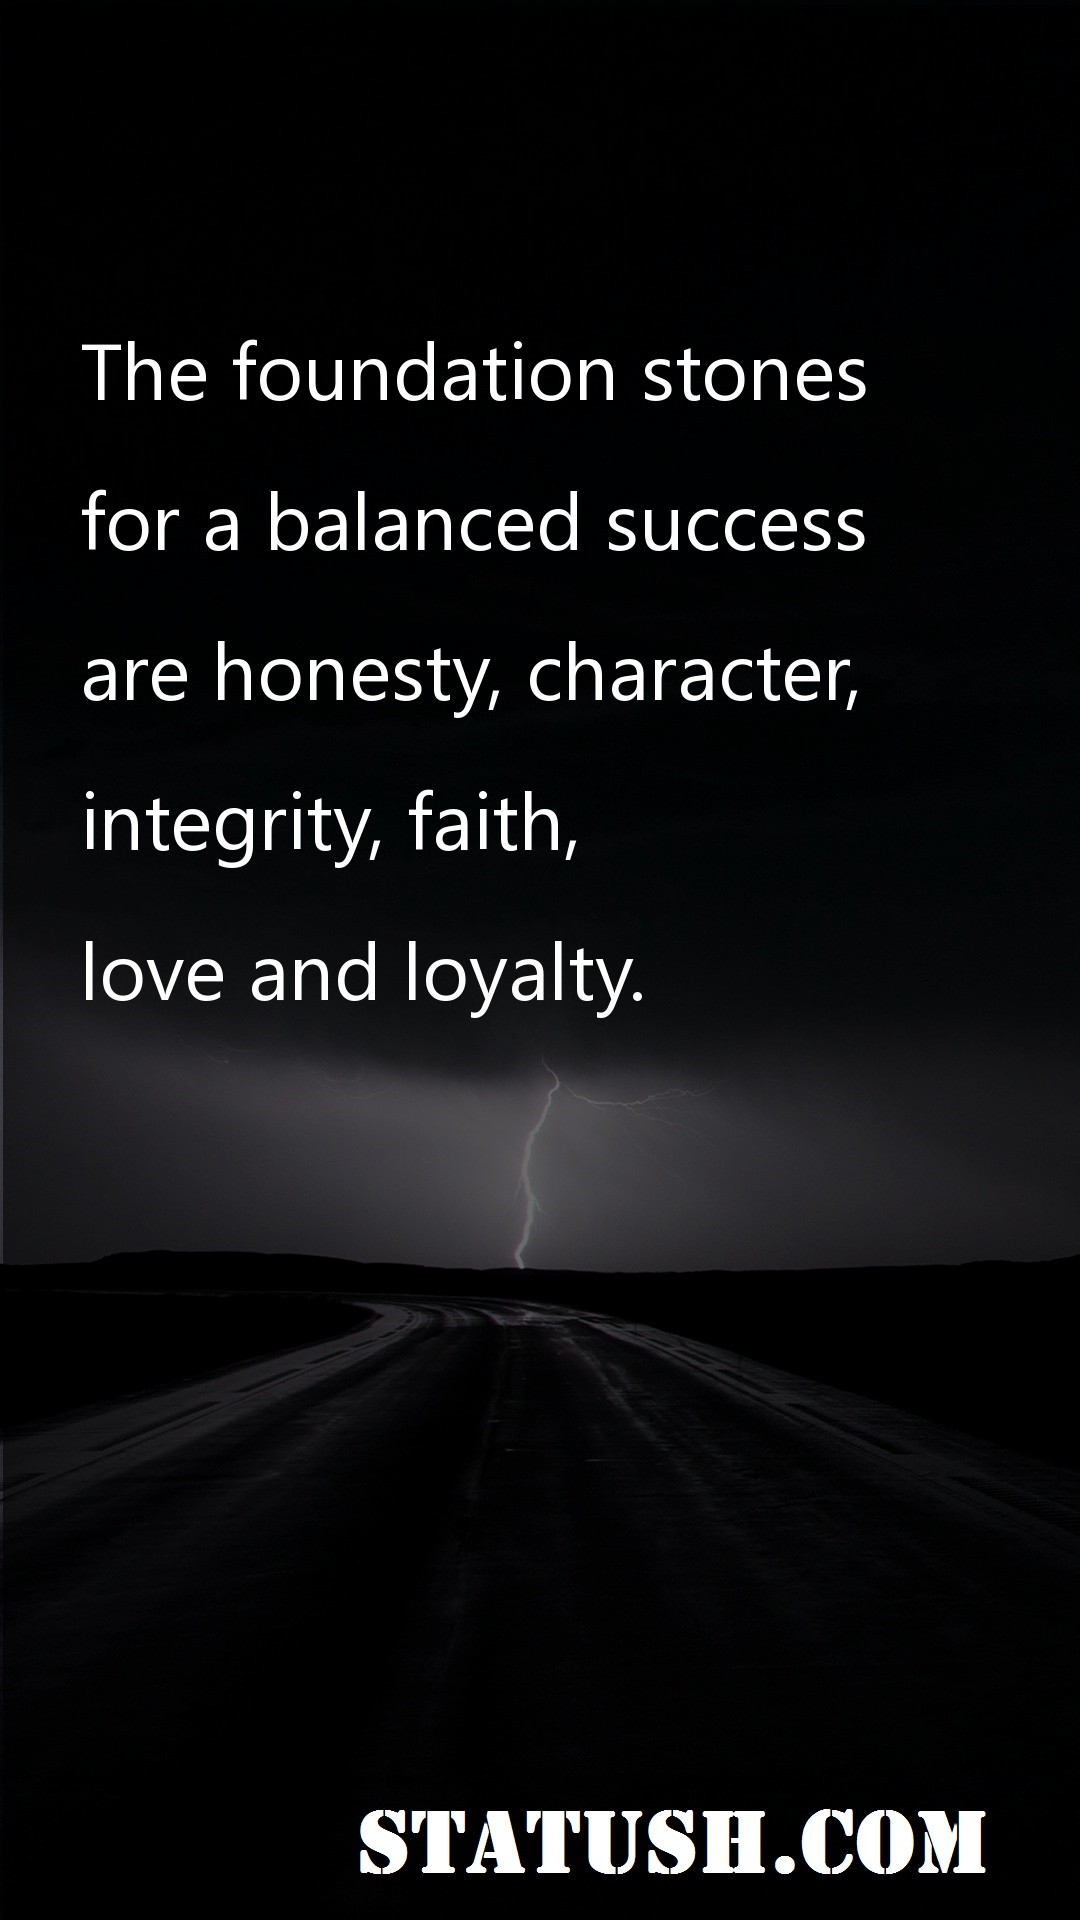 The foundation stones for a balanced success - Success Quotes at statush.com